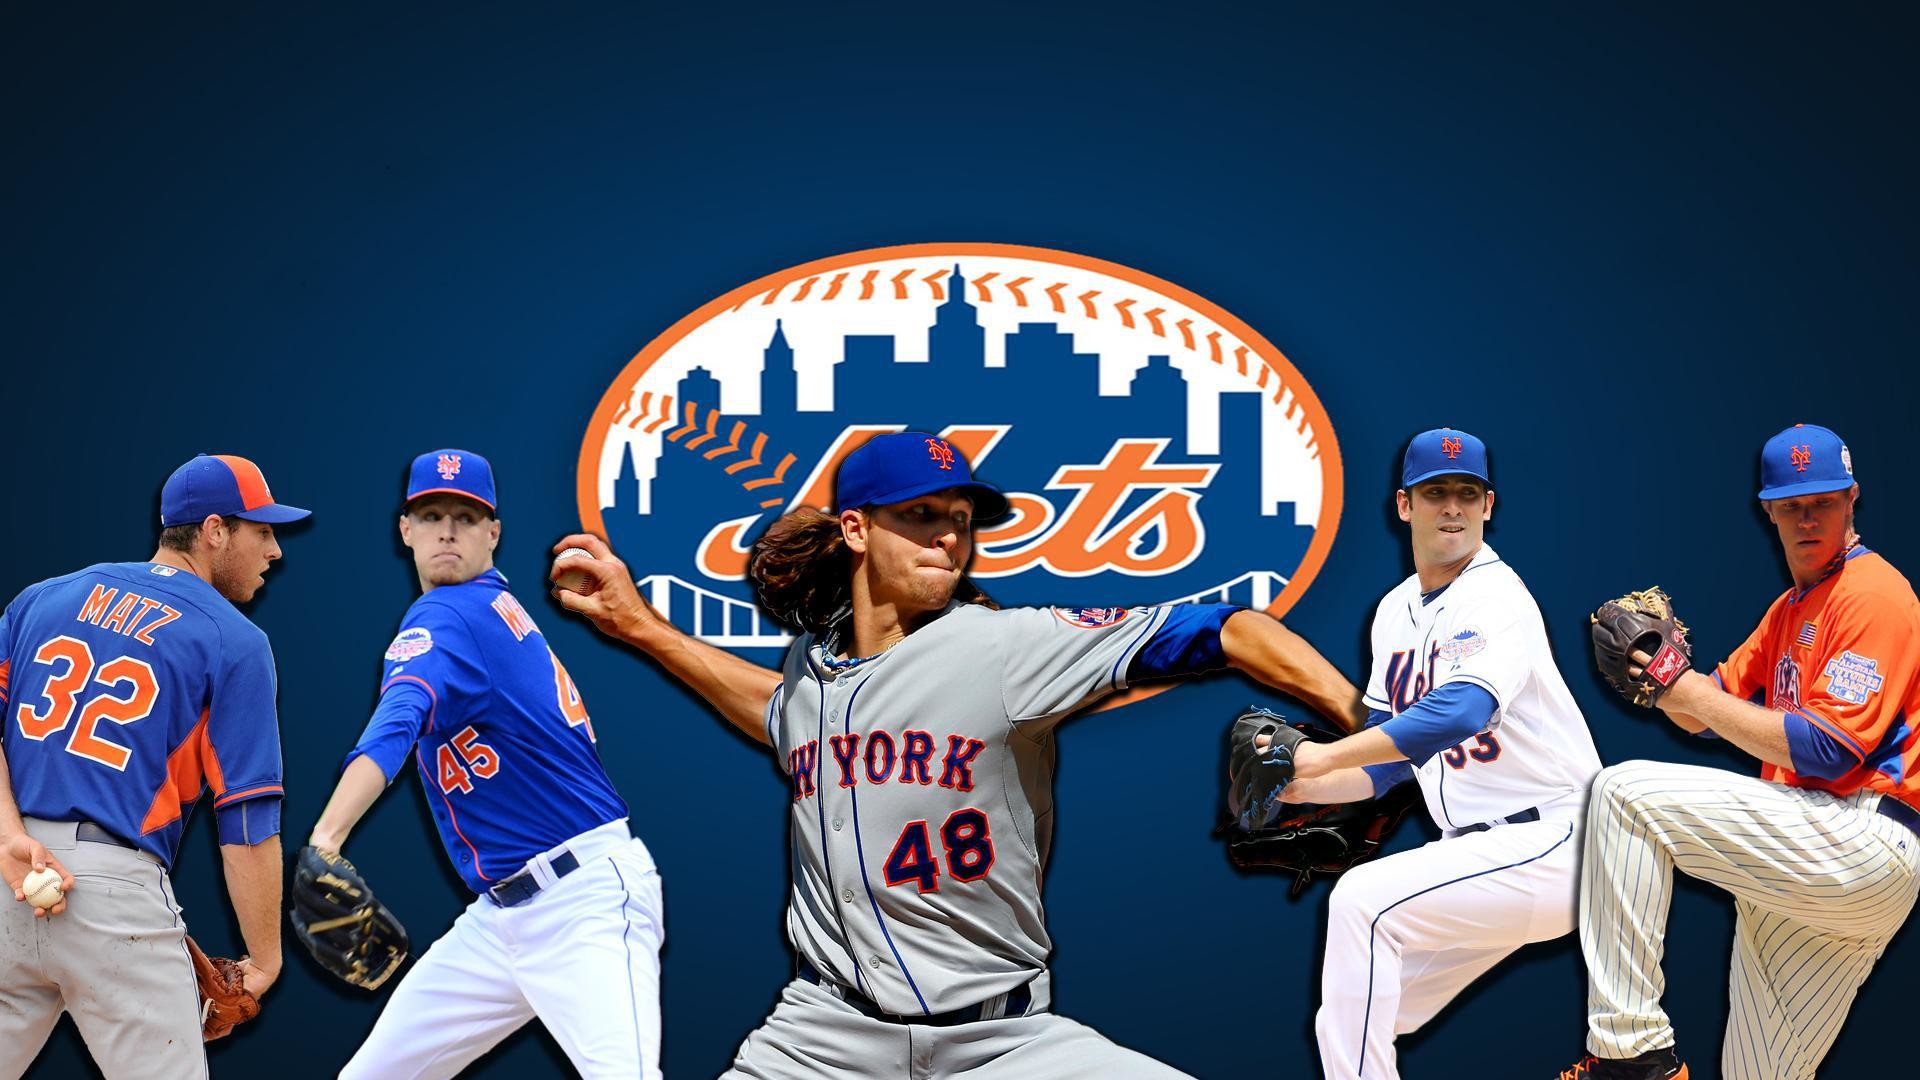 Free Ny Mets Wallpaper New York Mets Wallpapers Images - New York Mets Wallpaper 2019 - HD Wallpaper 